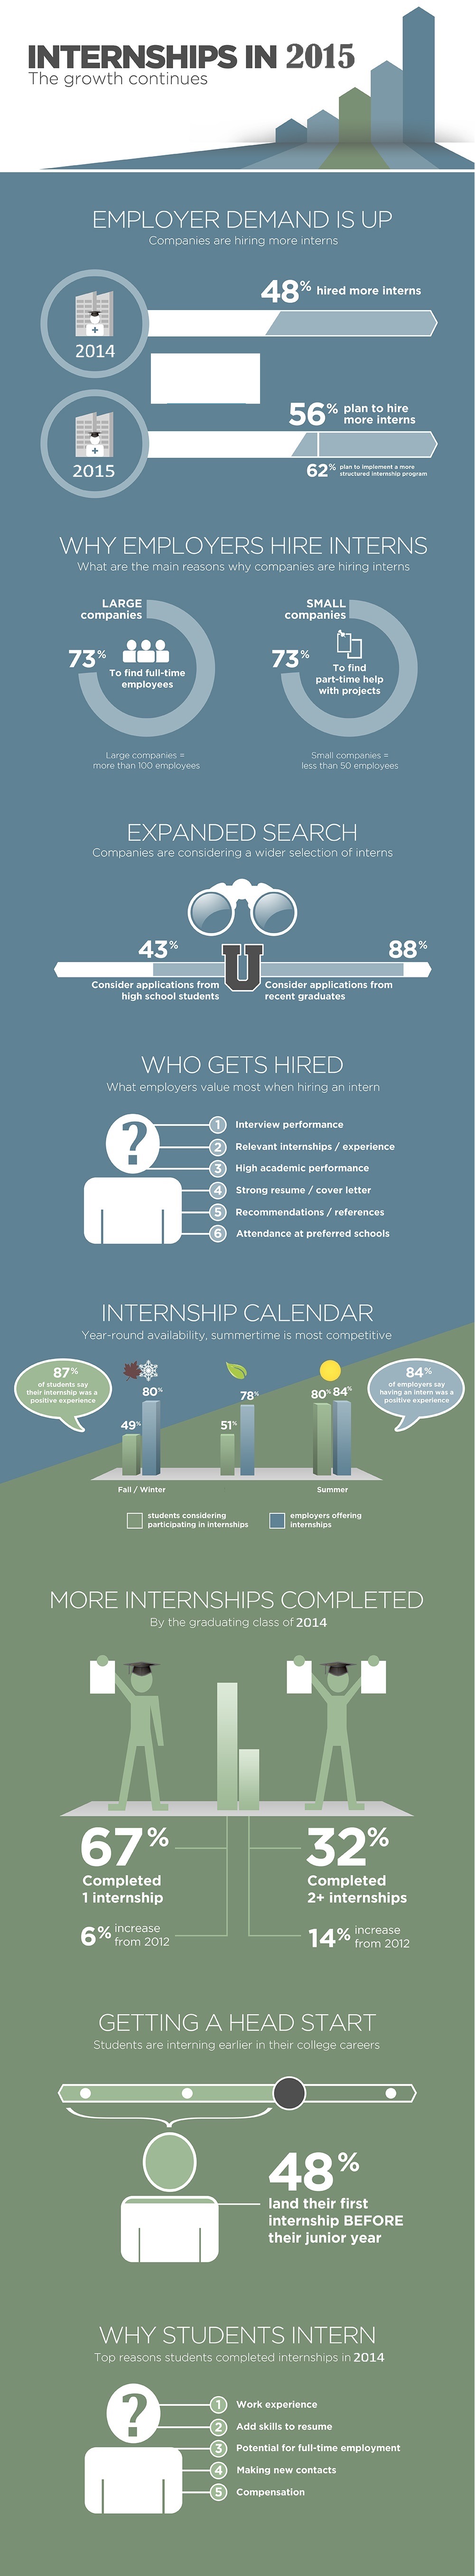 internships-survey-2015-infographic1blog